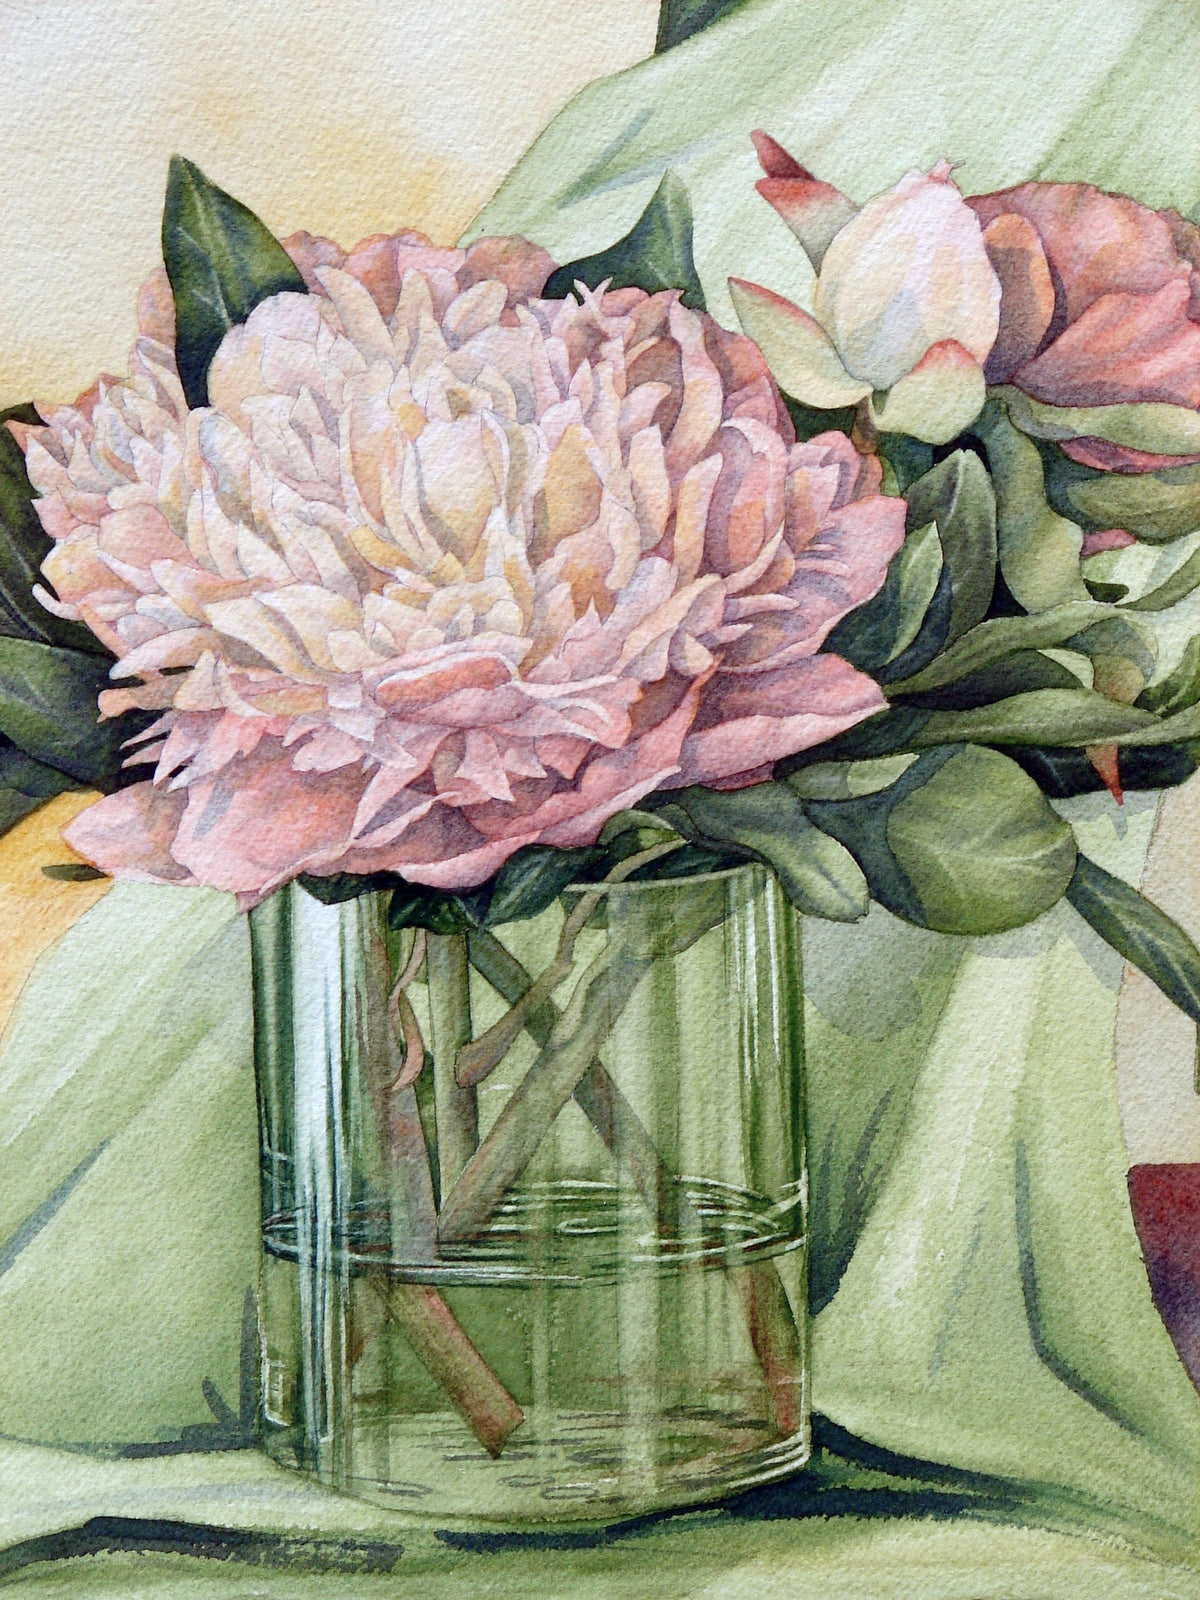 "Peonies in Glass" by Lori Sutphin - Watercolor